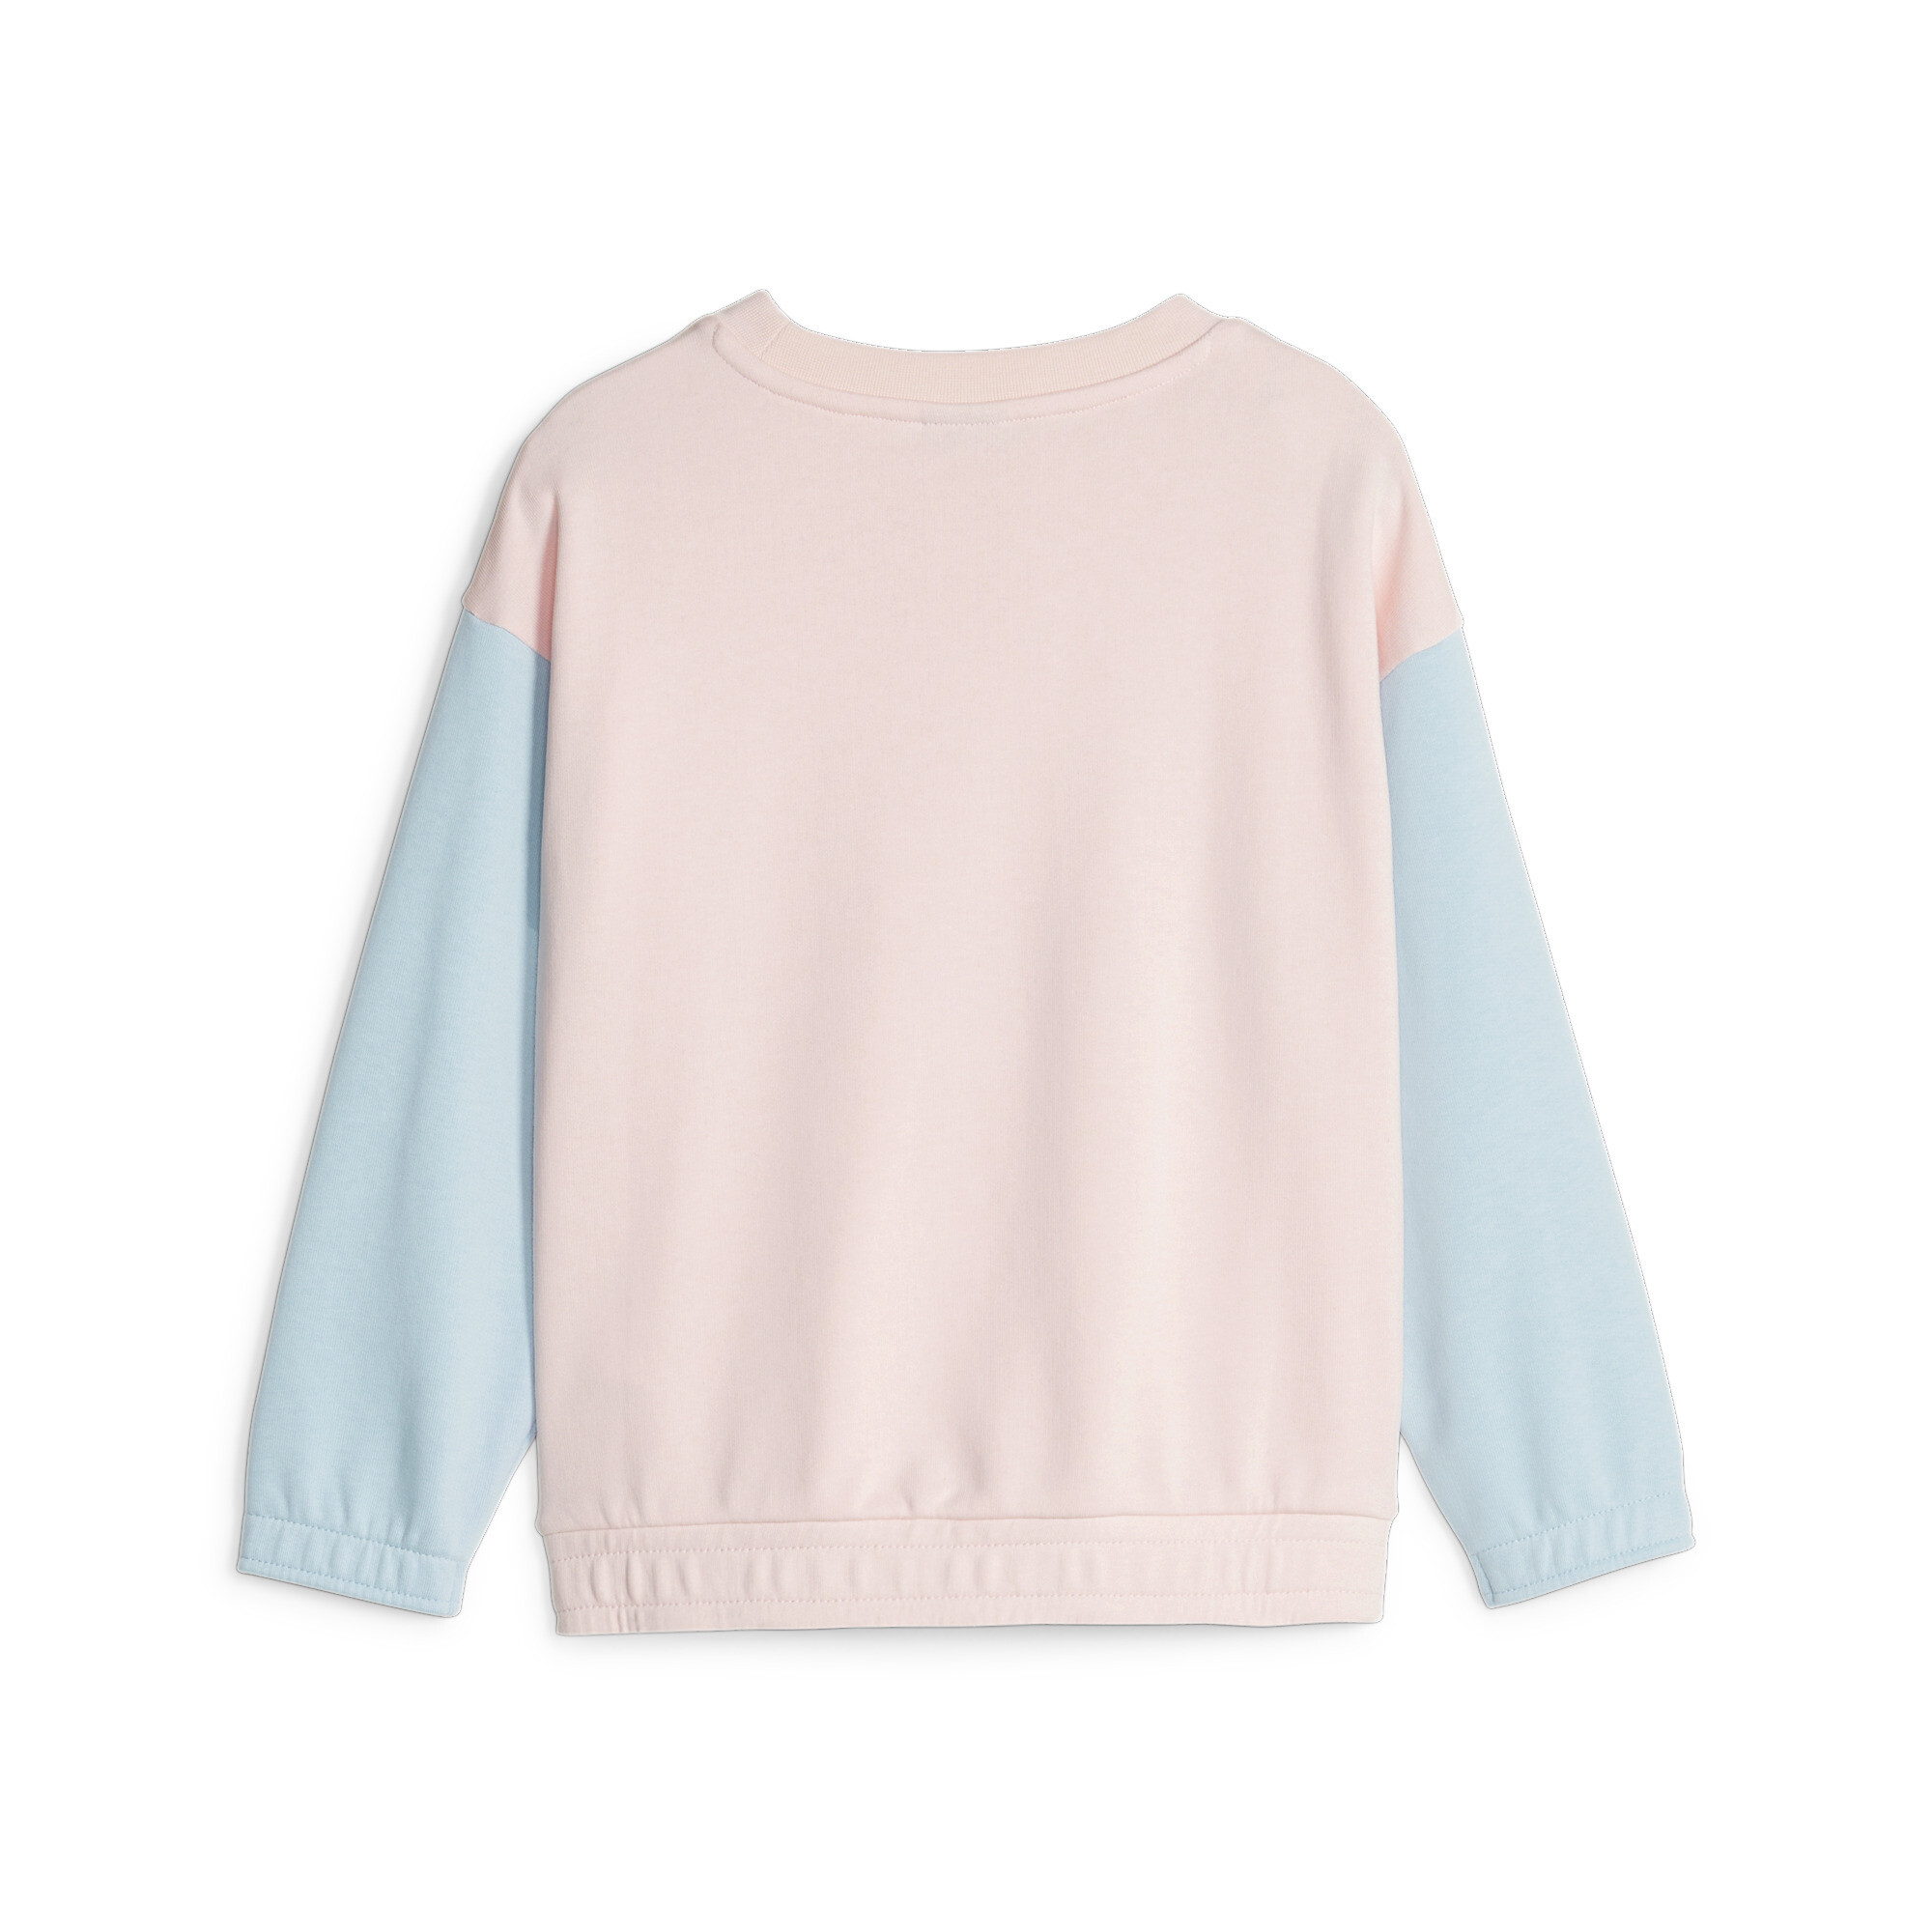 PUMA Classics Mix Match Sweatshirt In Pink, Size 3-4 Youth